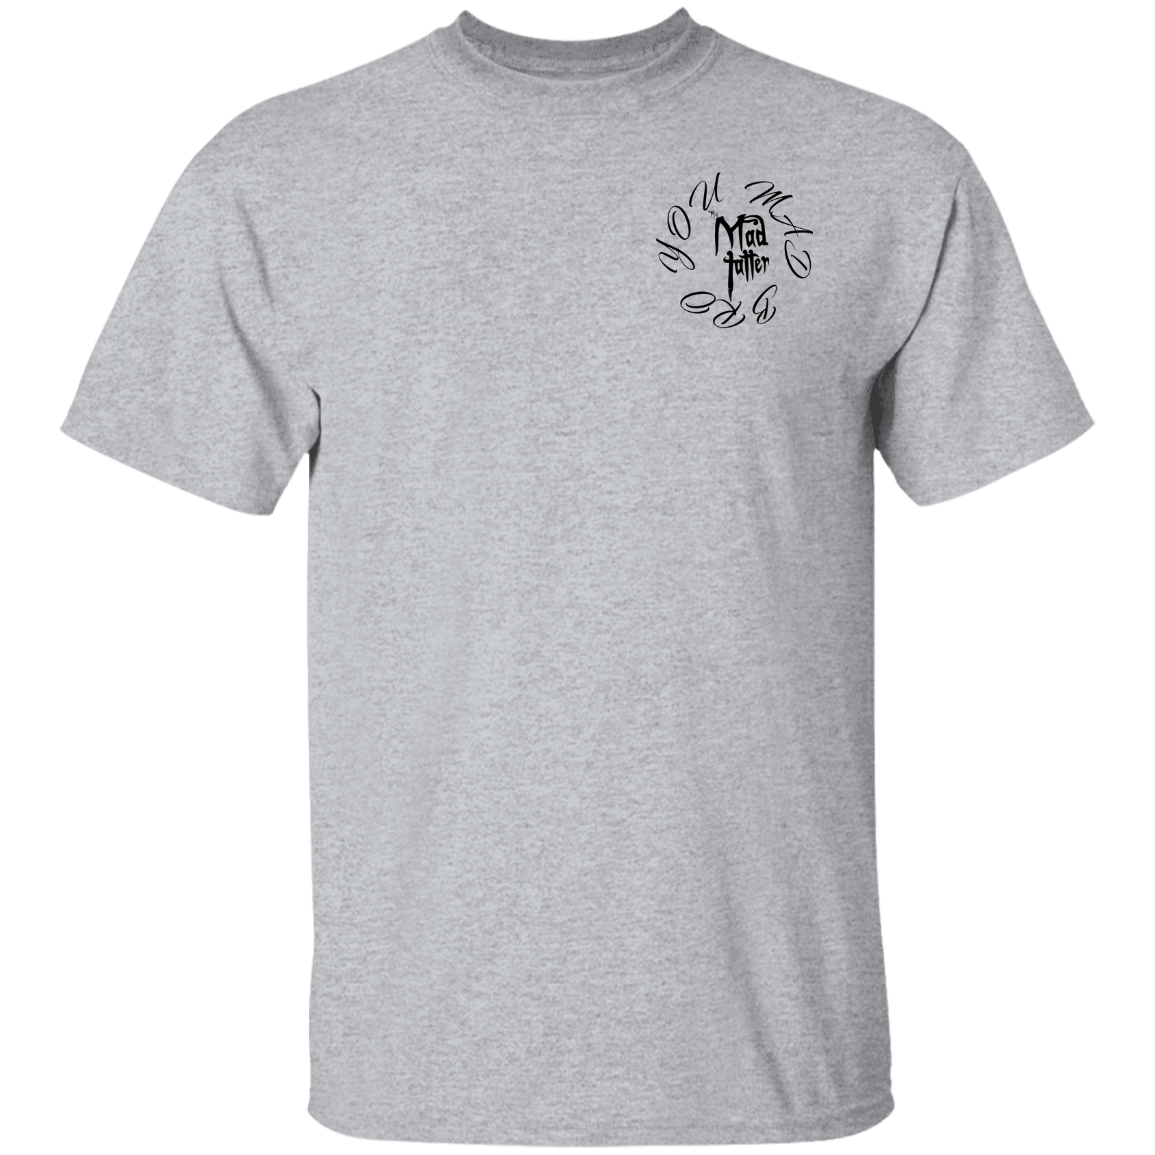 Space Weasel T-Shirt - Black Logo